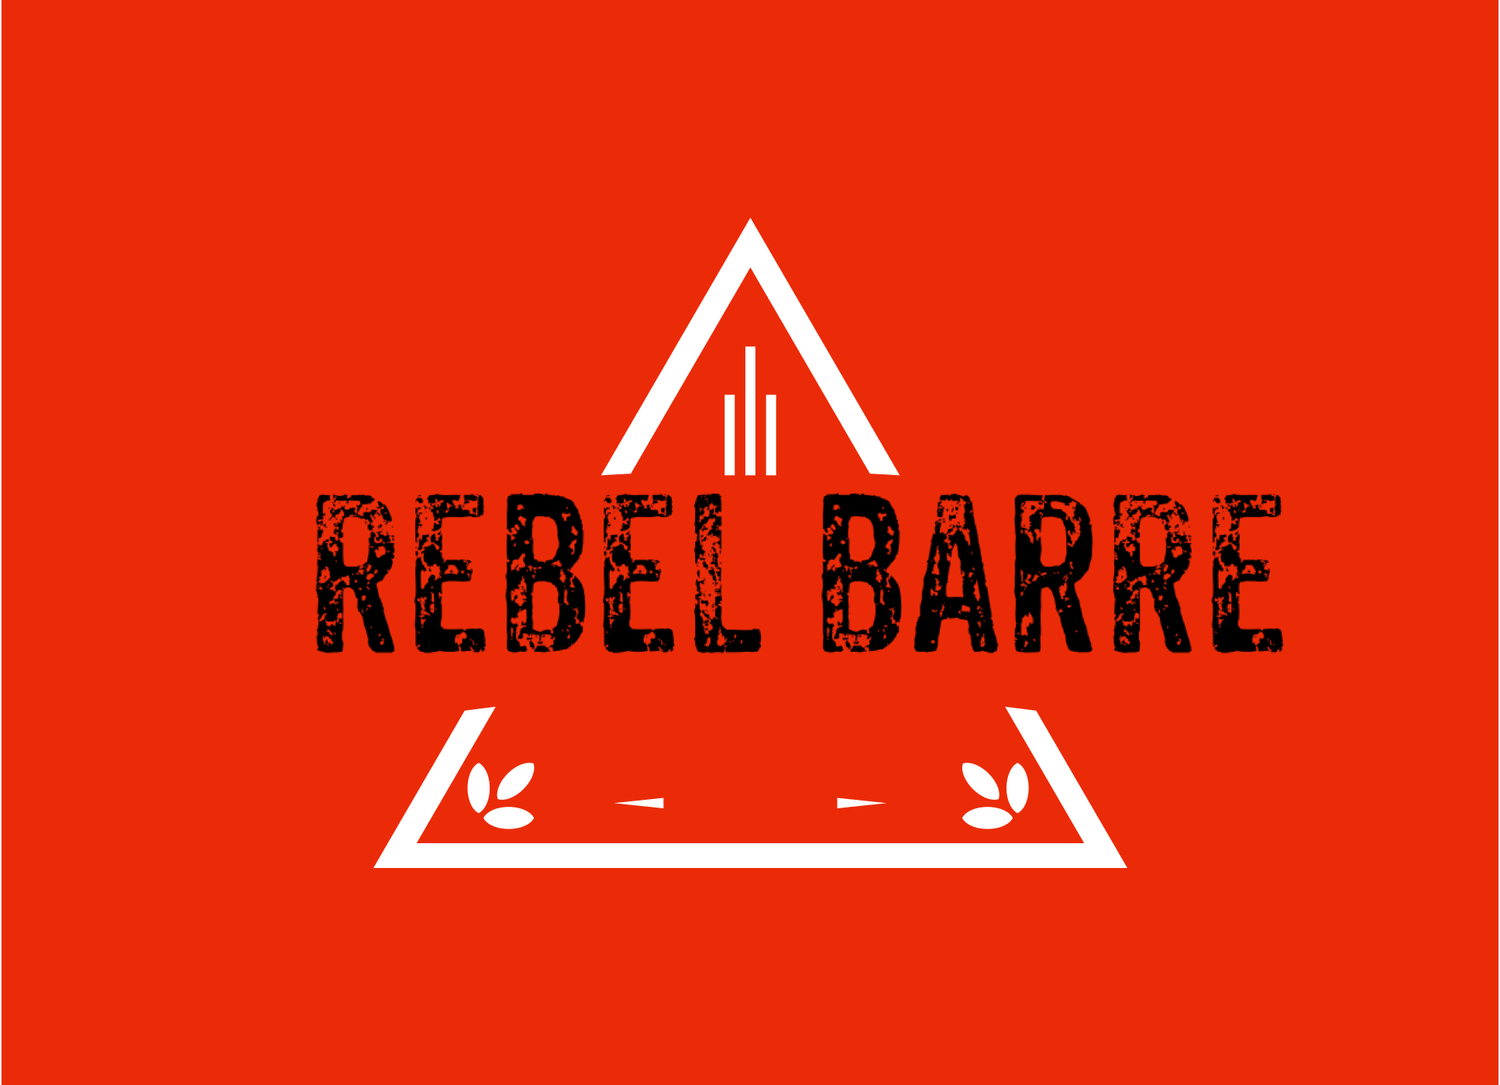 Rebel Barre